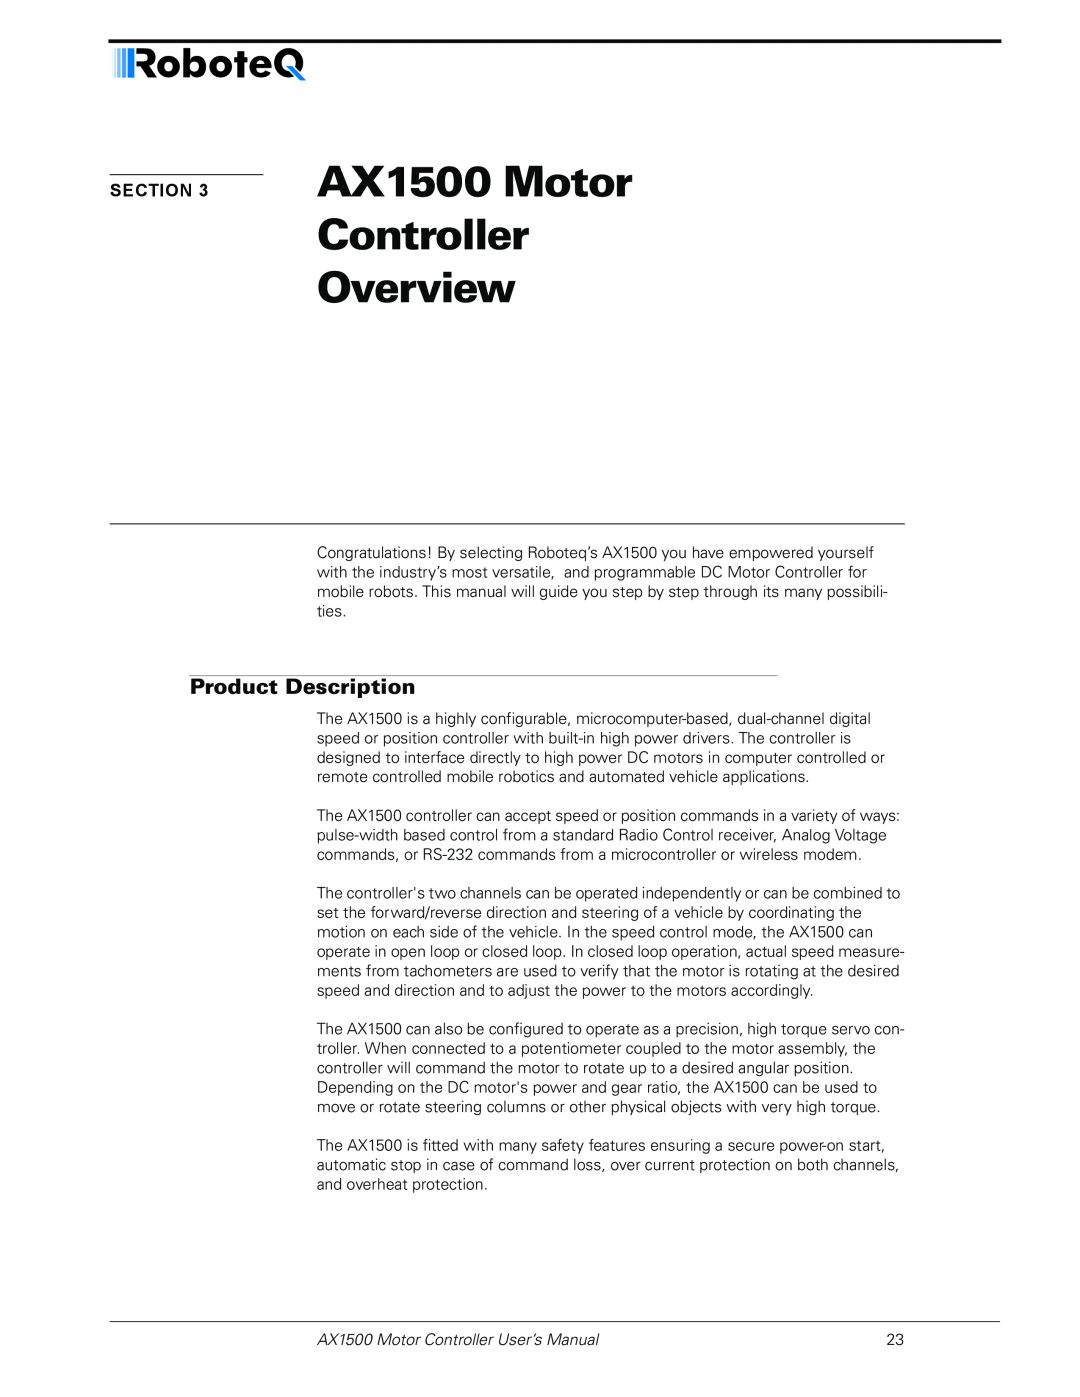 RoboteQ AX2550 user manual AX1500 Motor Controller Overview, Product Description, AX1500 Motor Controller User’s Manual 